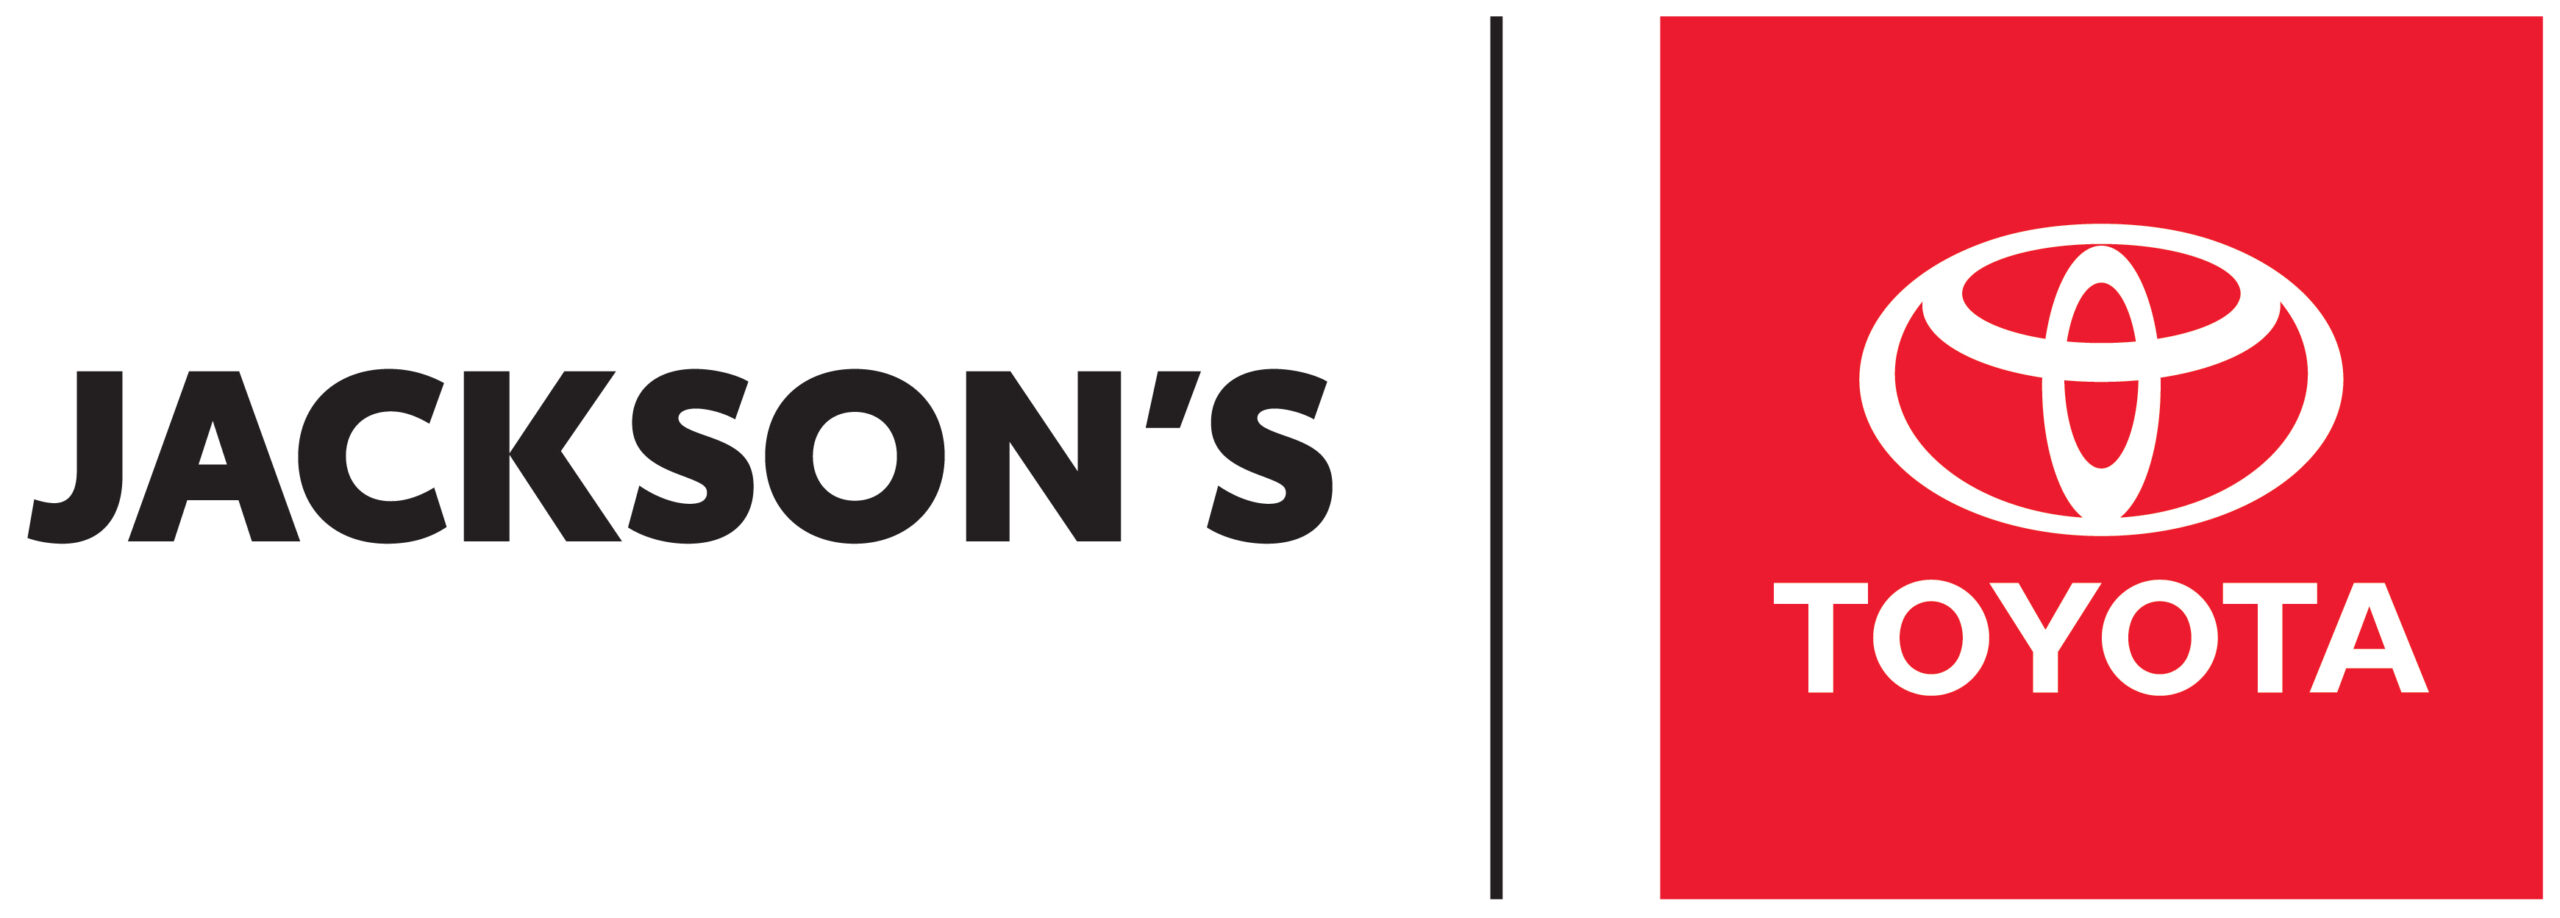 Jacksons Toyota logo